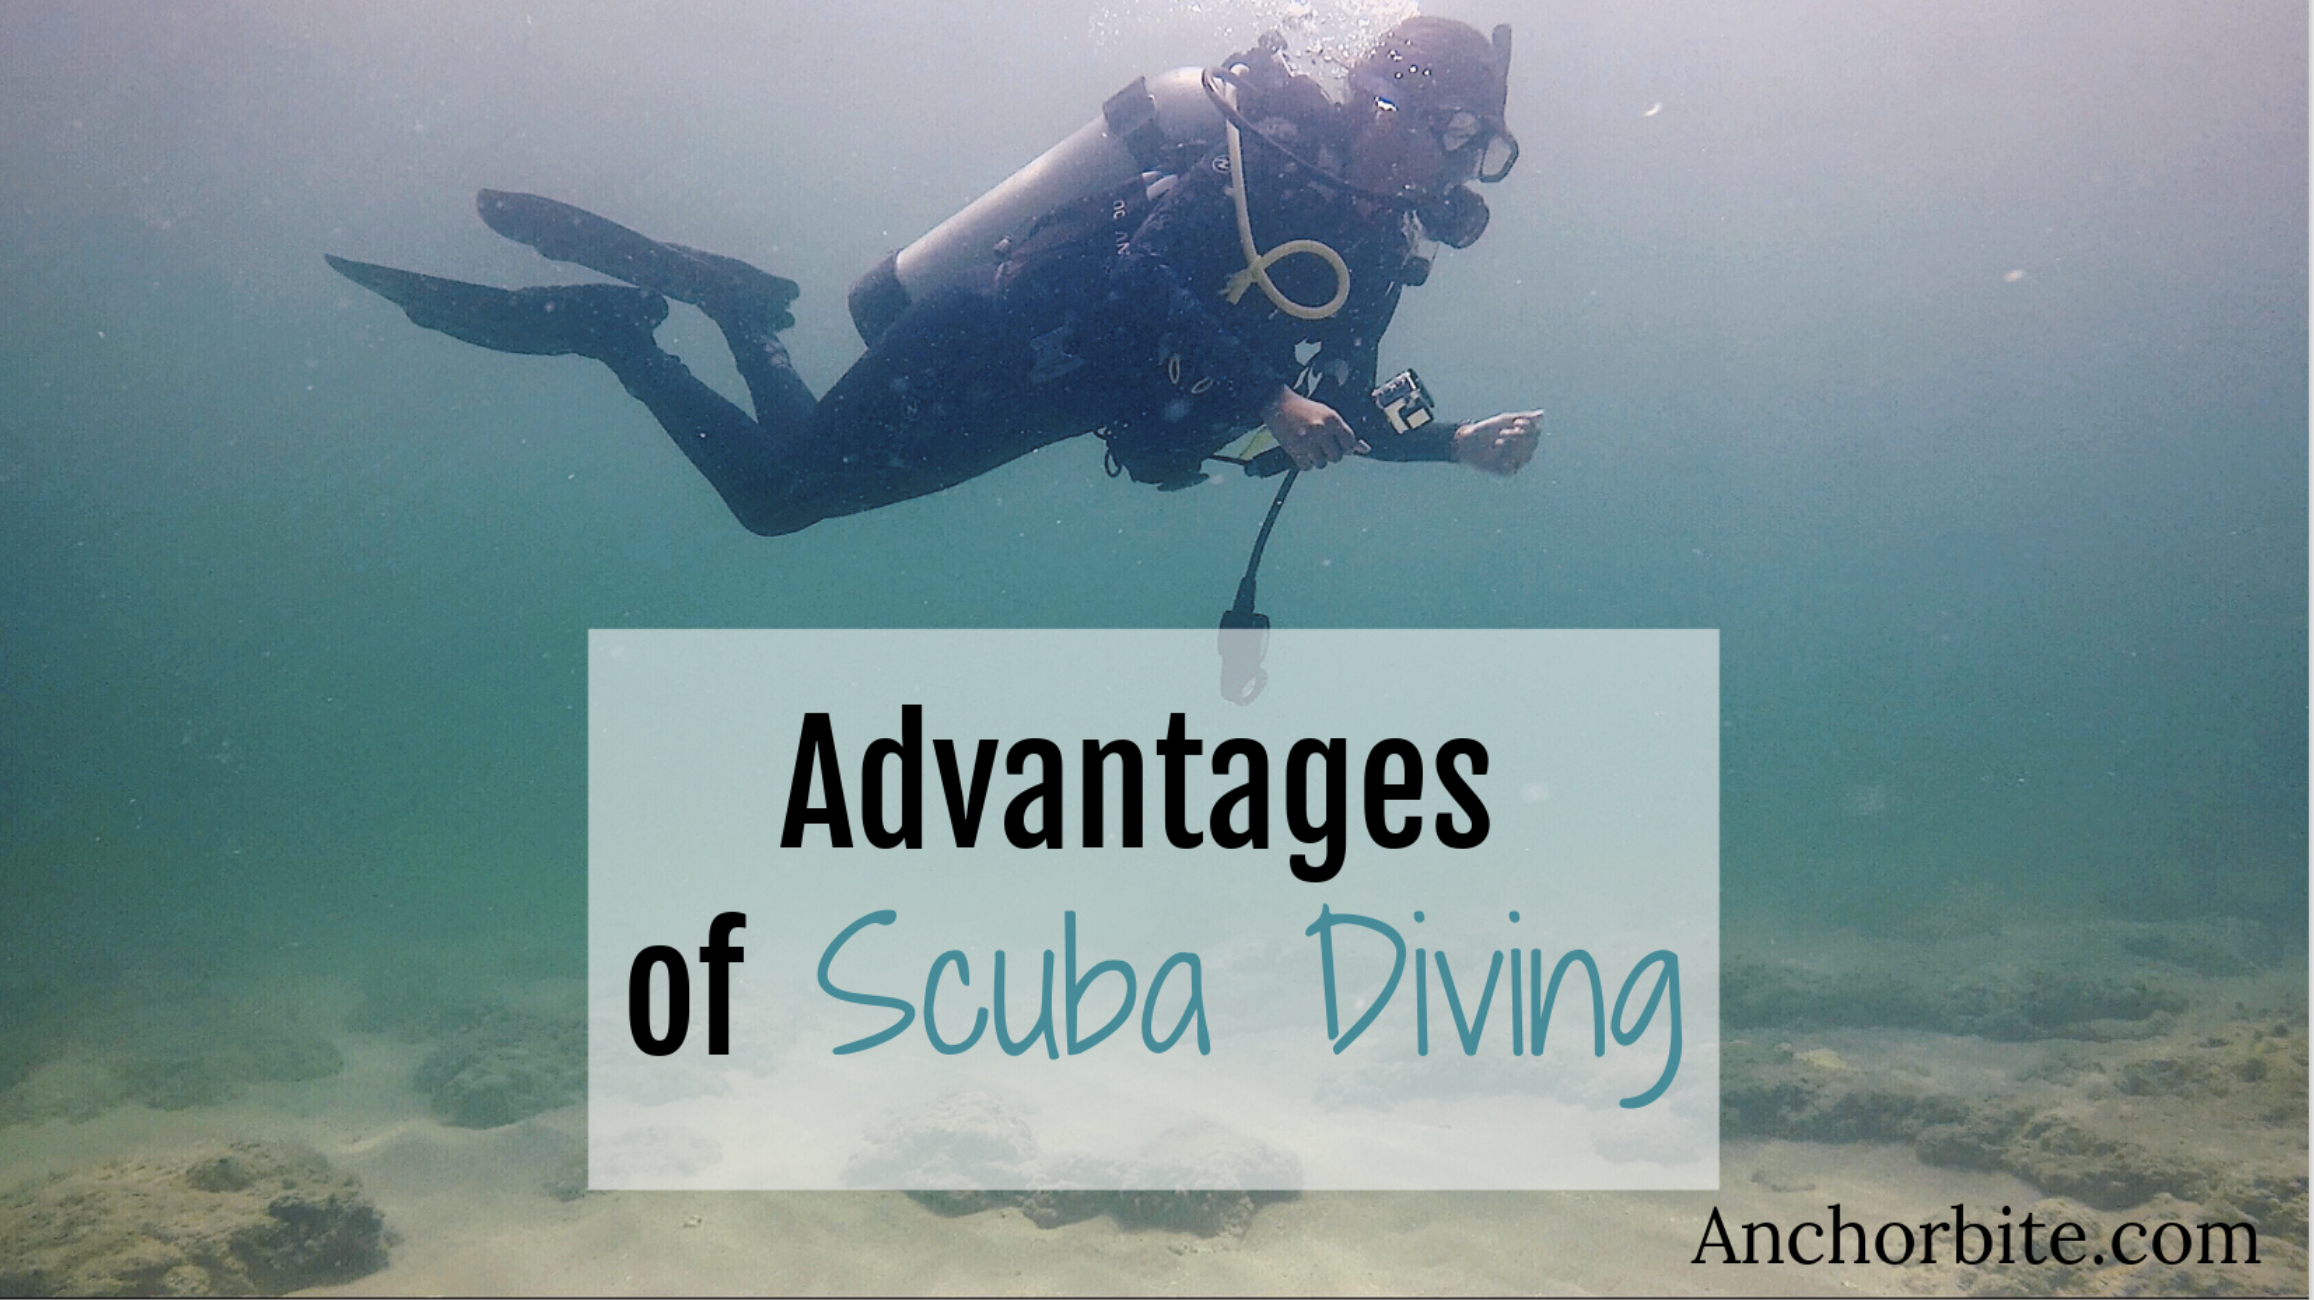 Advantages of Scuba Diving